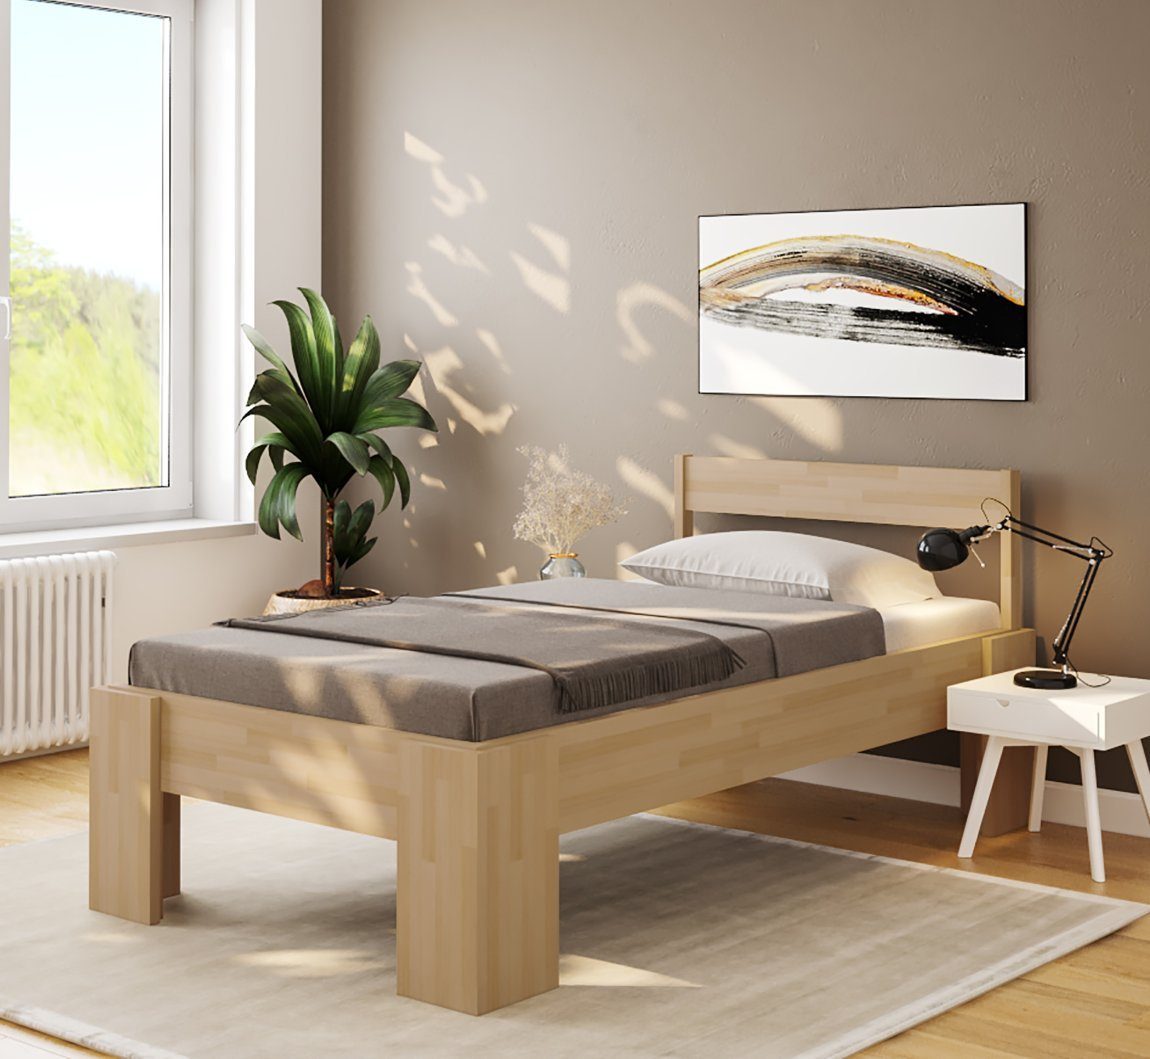 bv-vertrieb Bett Komfortbett mit erhöhter Liegefläche Holzbett, Holz  unbehandelt